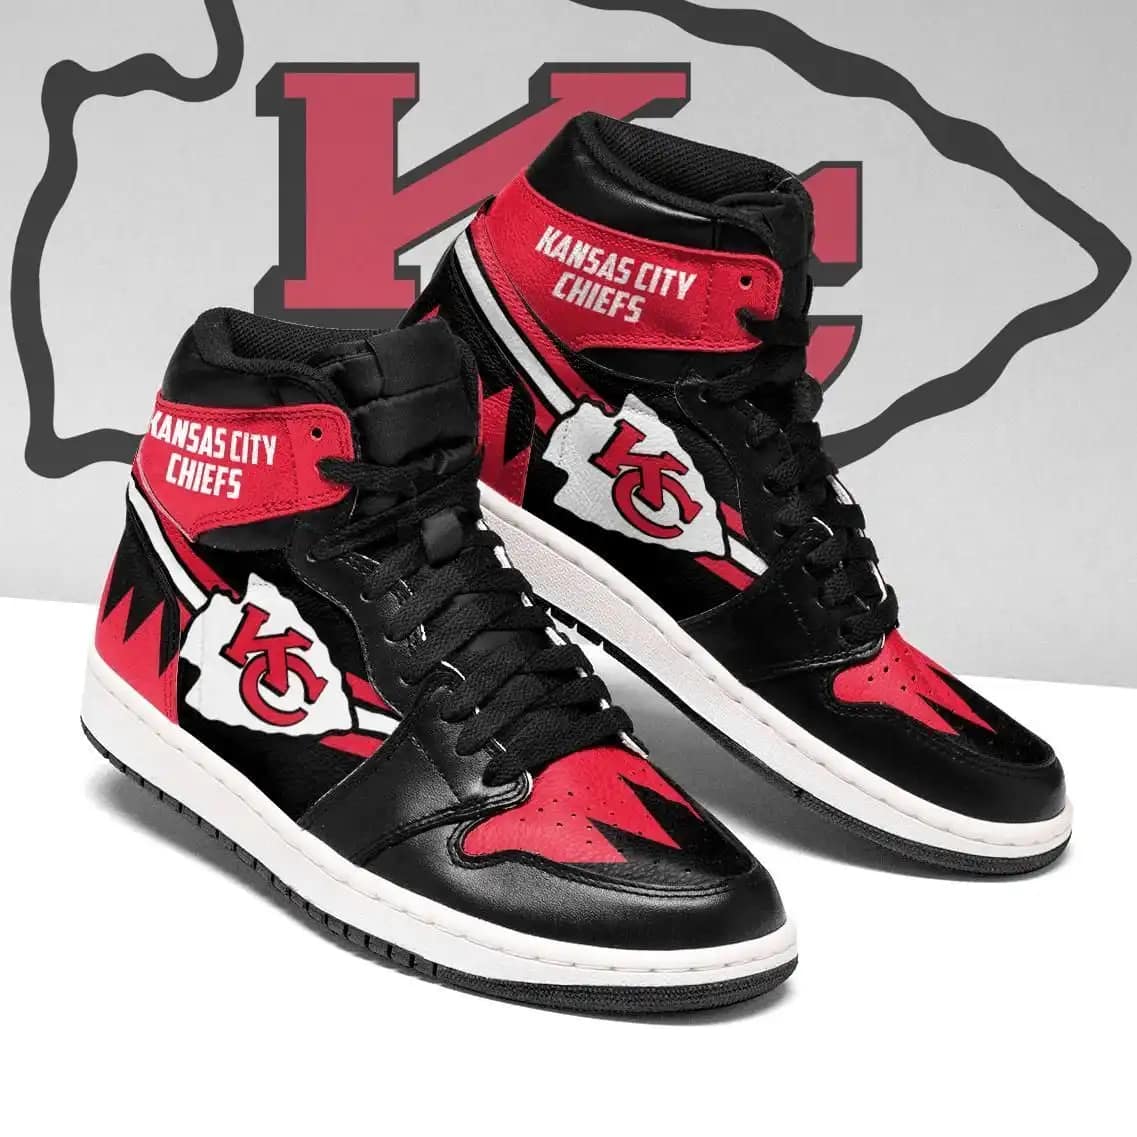 Kansas City Chiefs Team Air Jordan Shoes